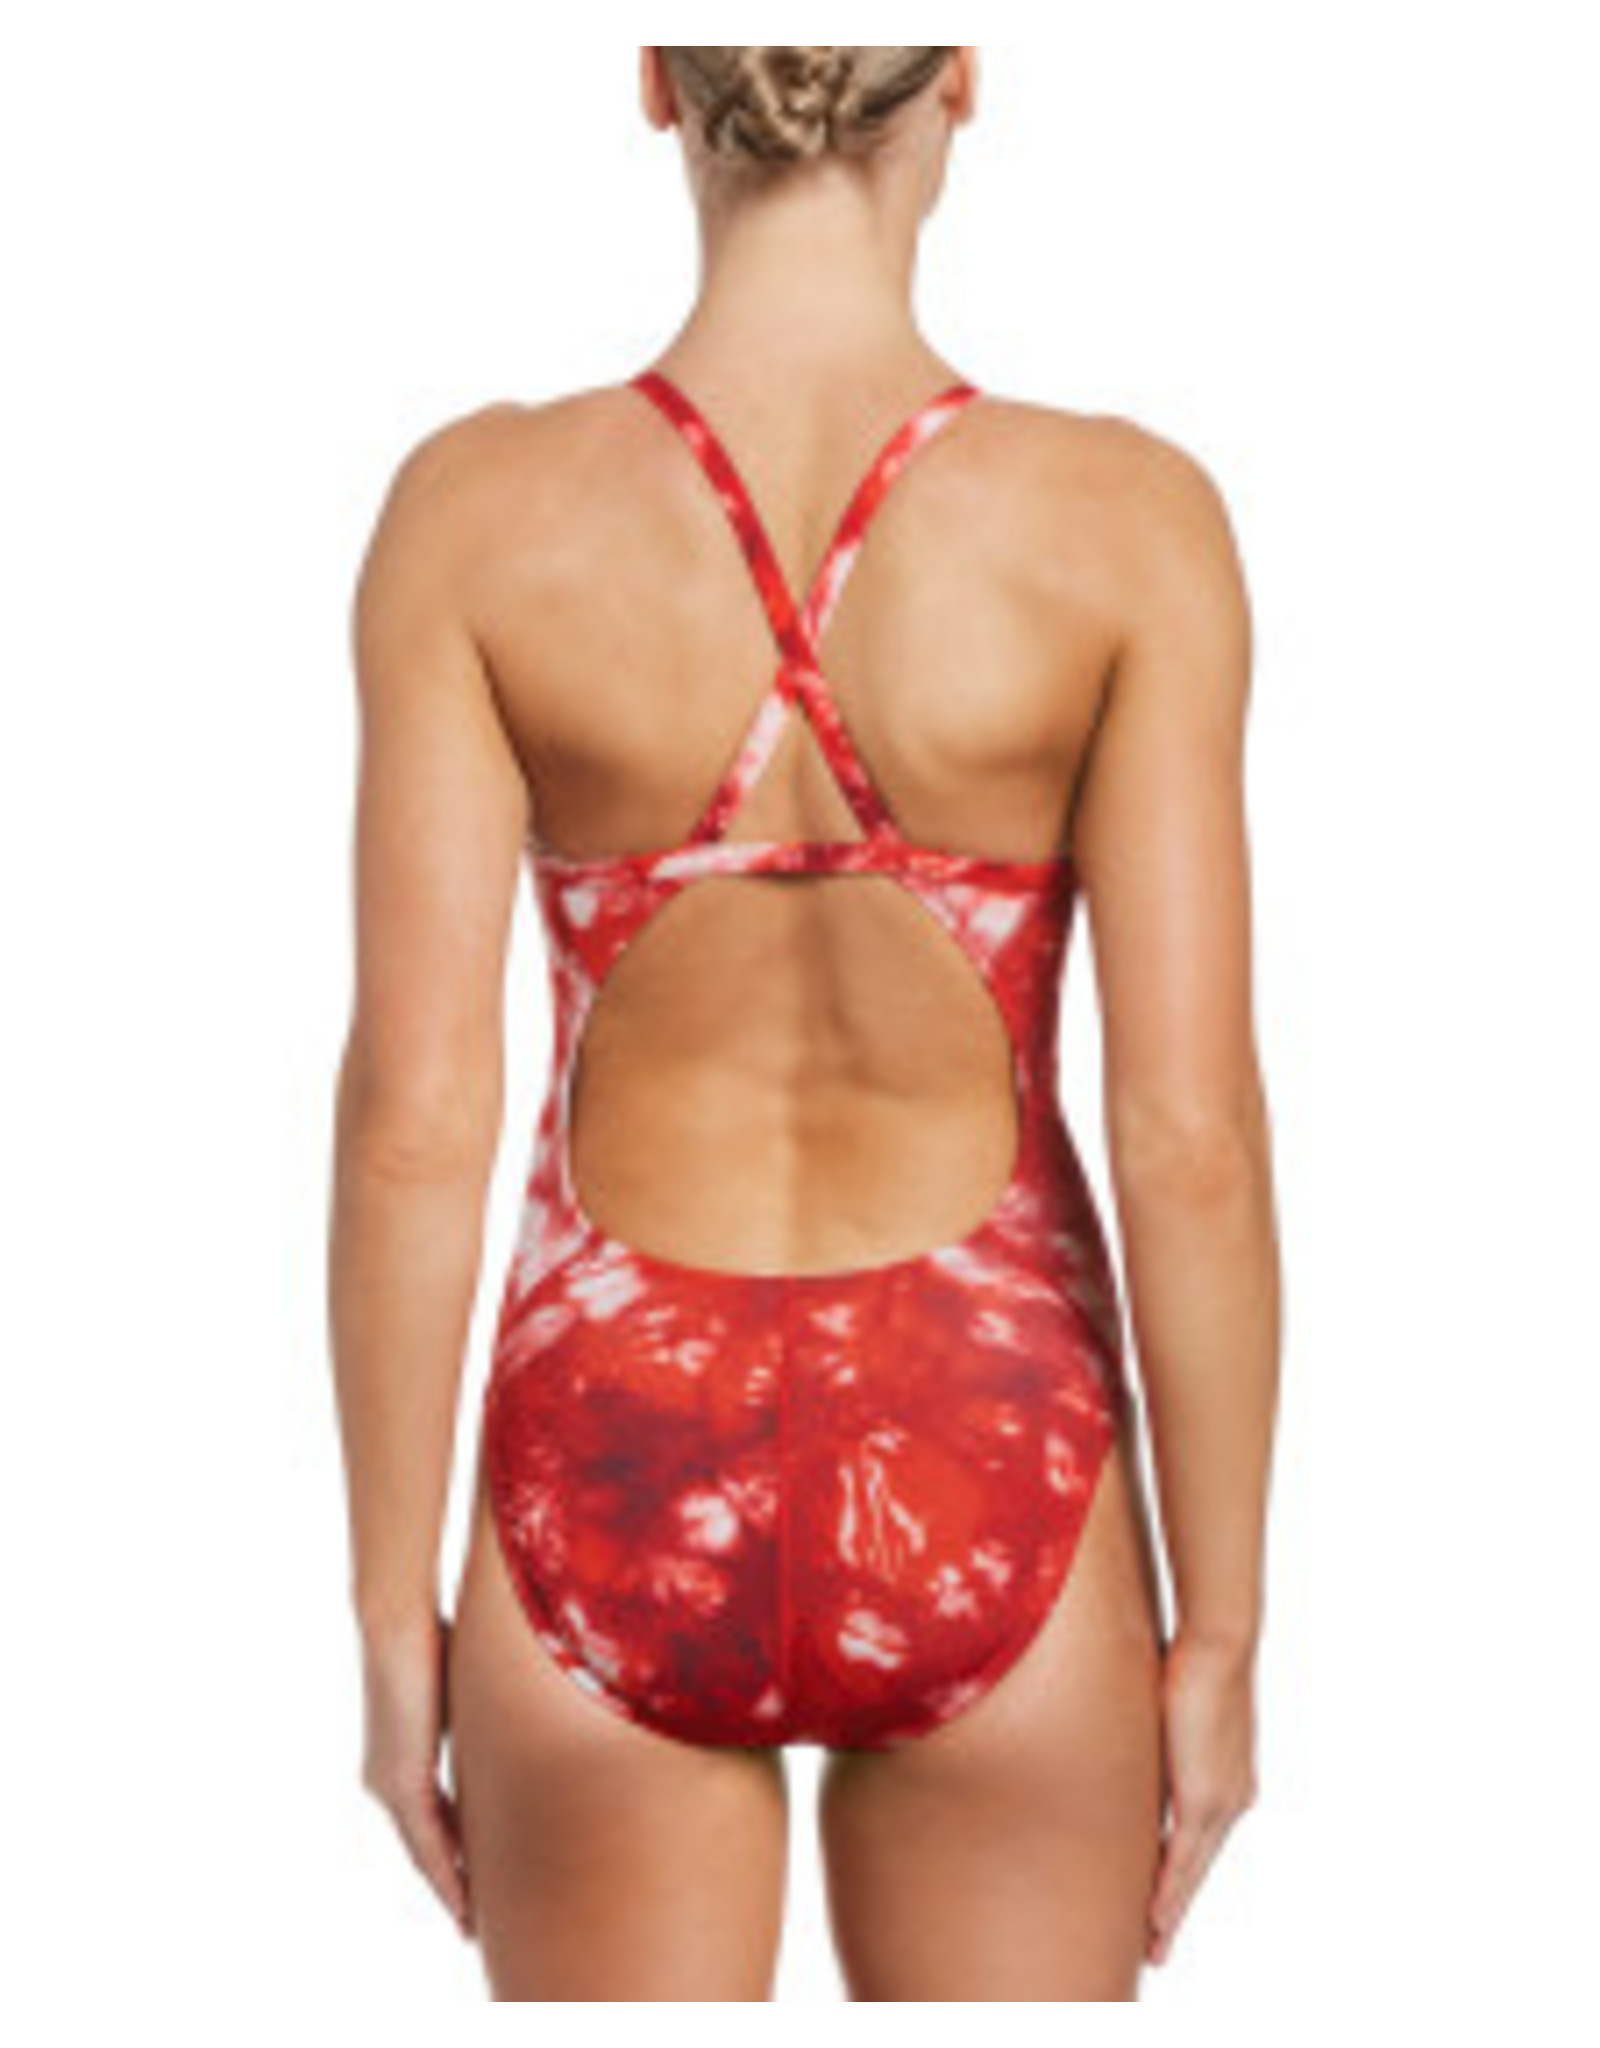 Nike Women's Hydrastrong Vex Colorblock Cutout One Piece Swimsuit